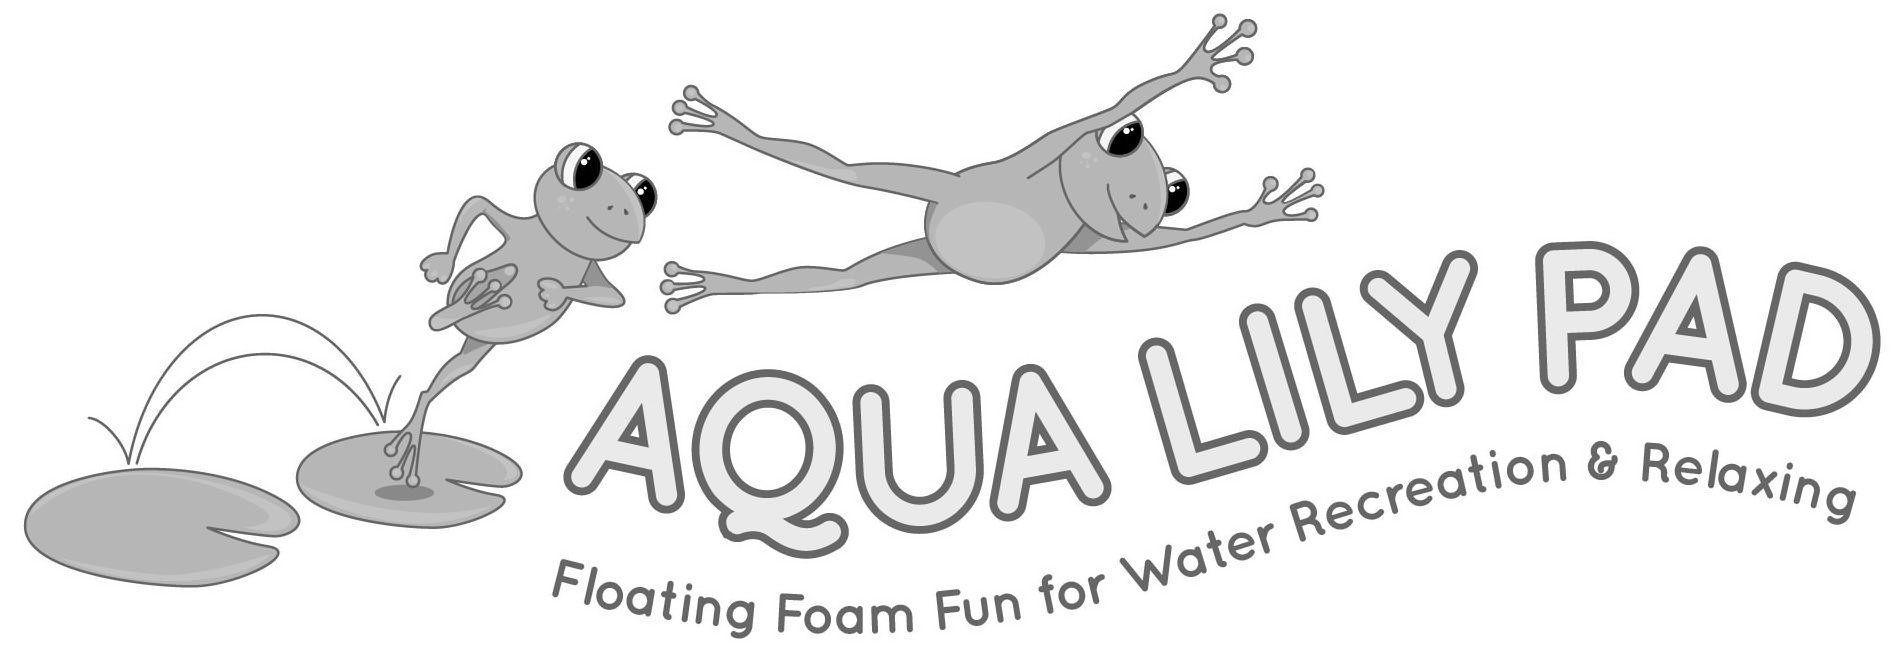  AQUA LILY PAD FLOATING FOAM FUN FOR WATER RECREATION &amp; RELAXING